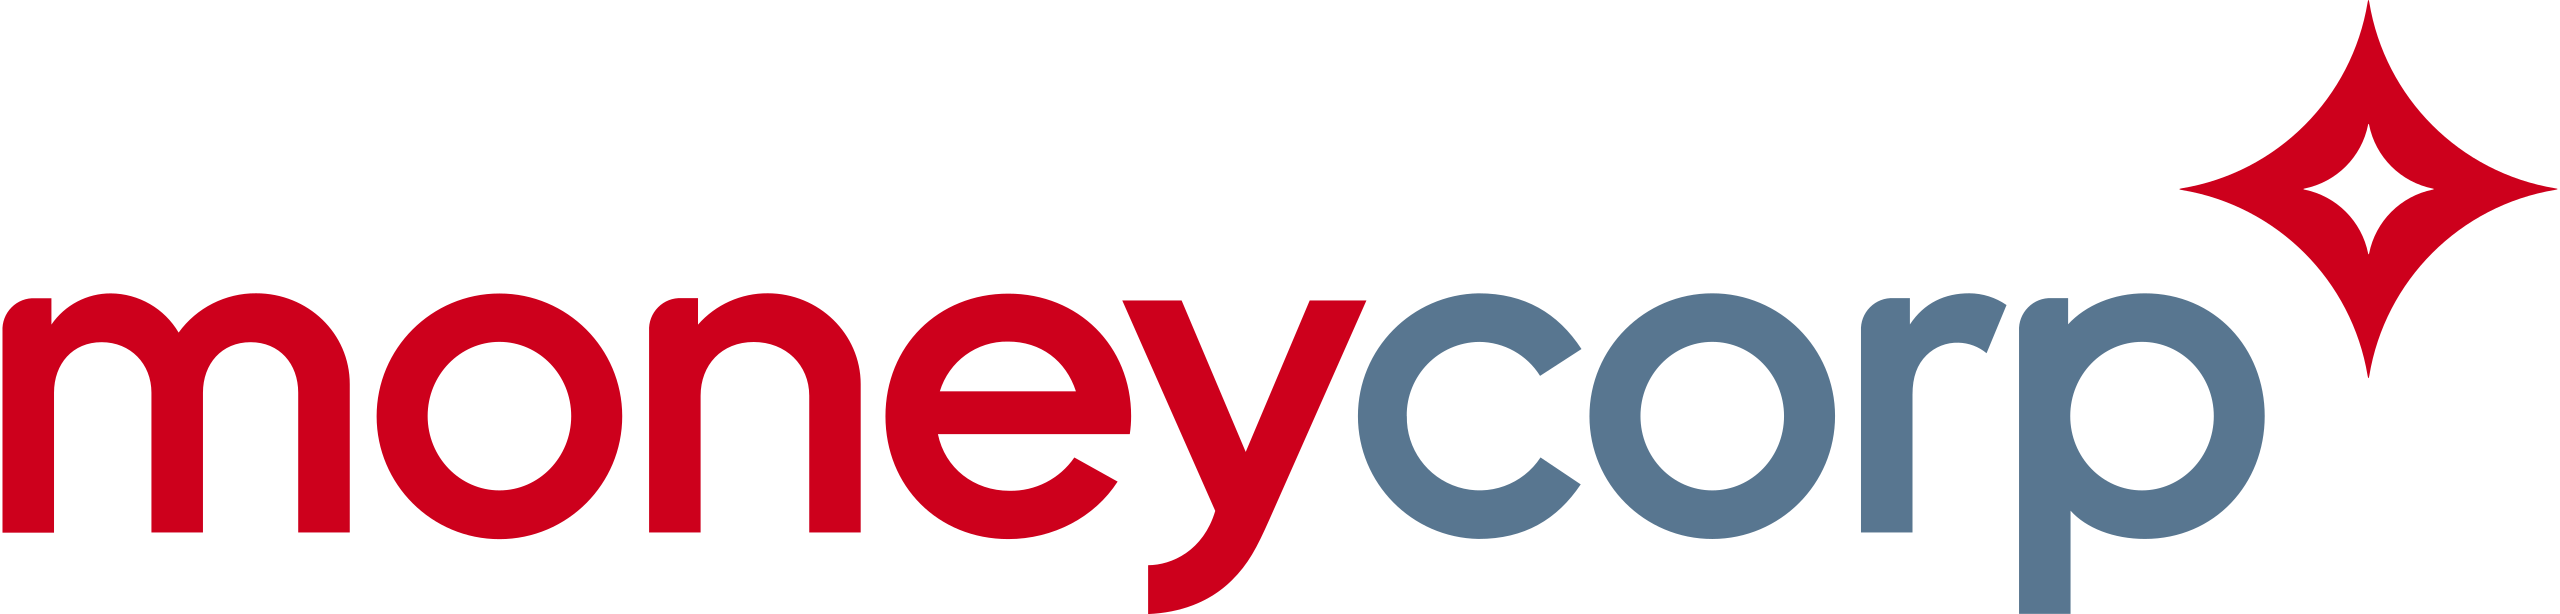 Moneycorp_logo.svg